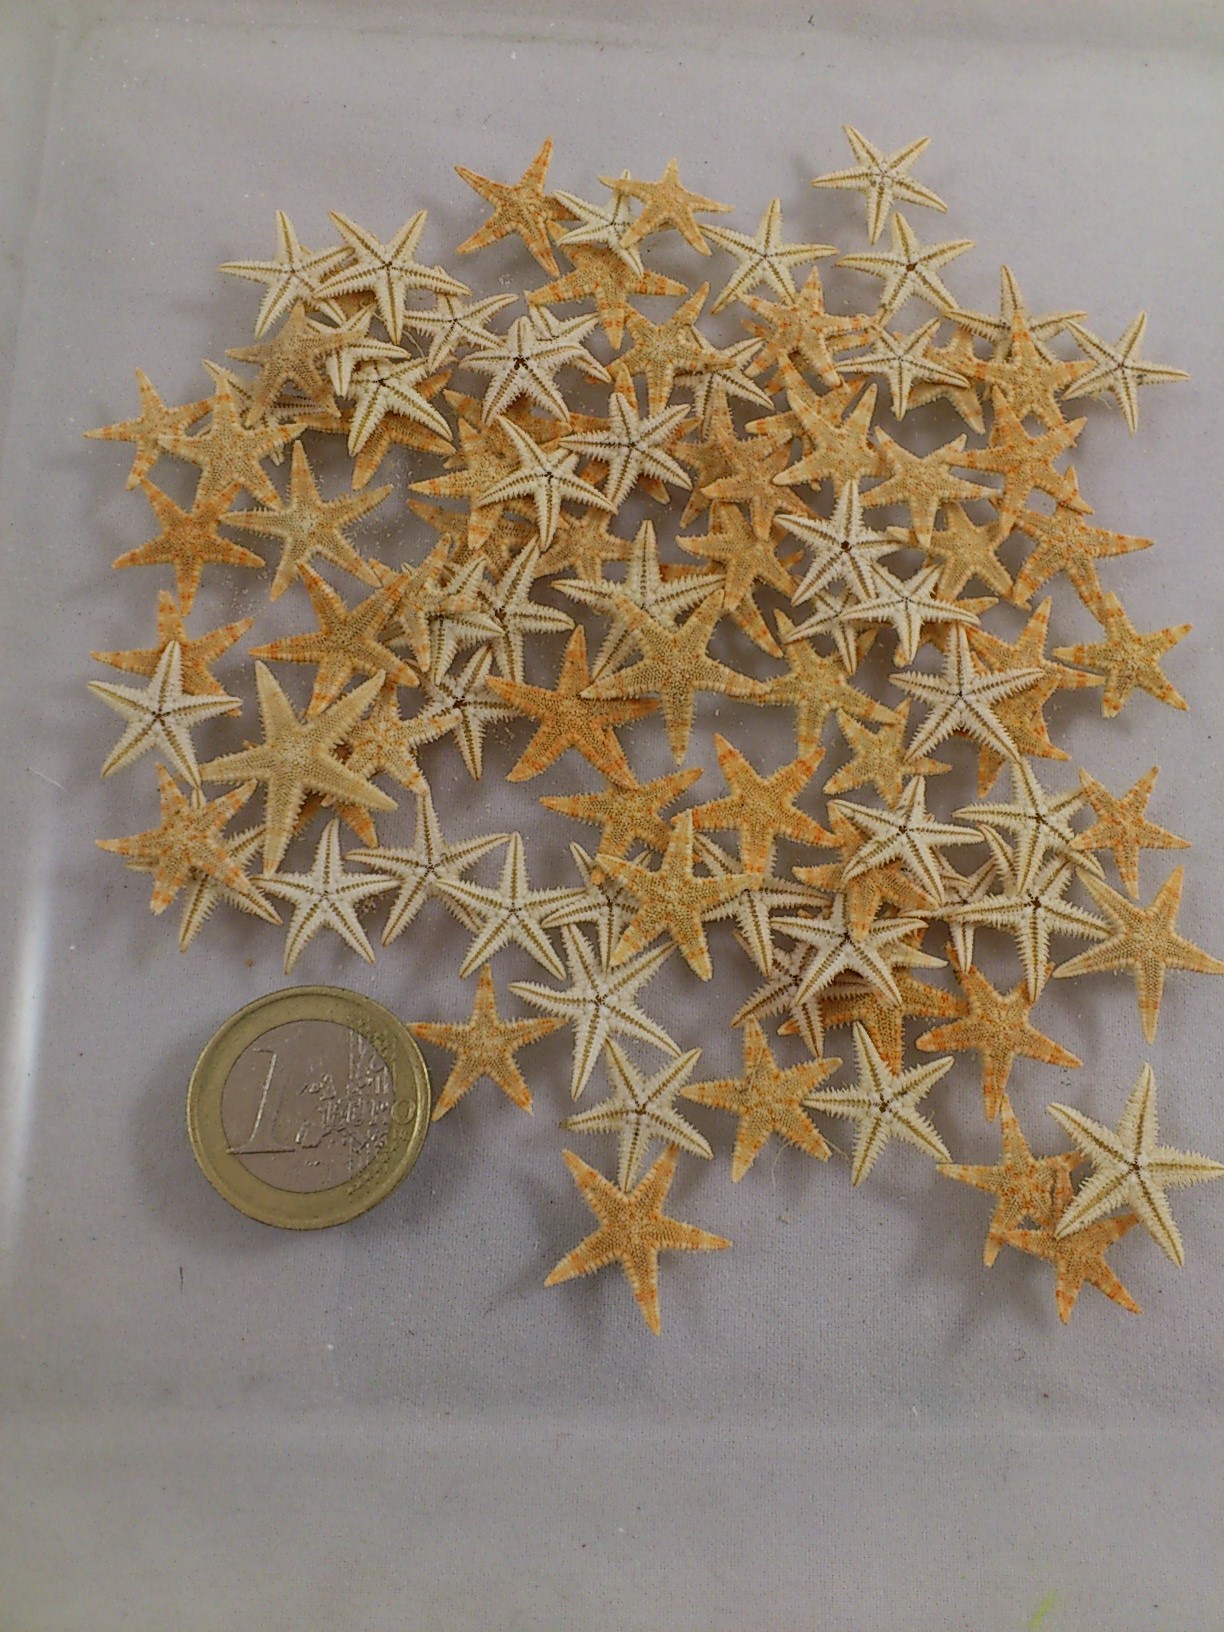 Seestern 2-3 cm (sugar starfish) 100 st.